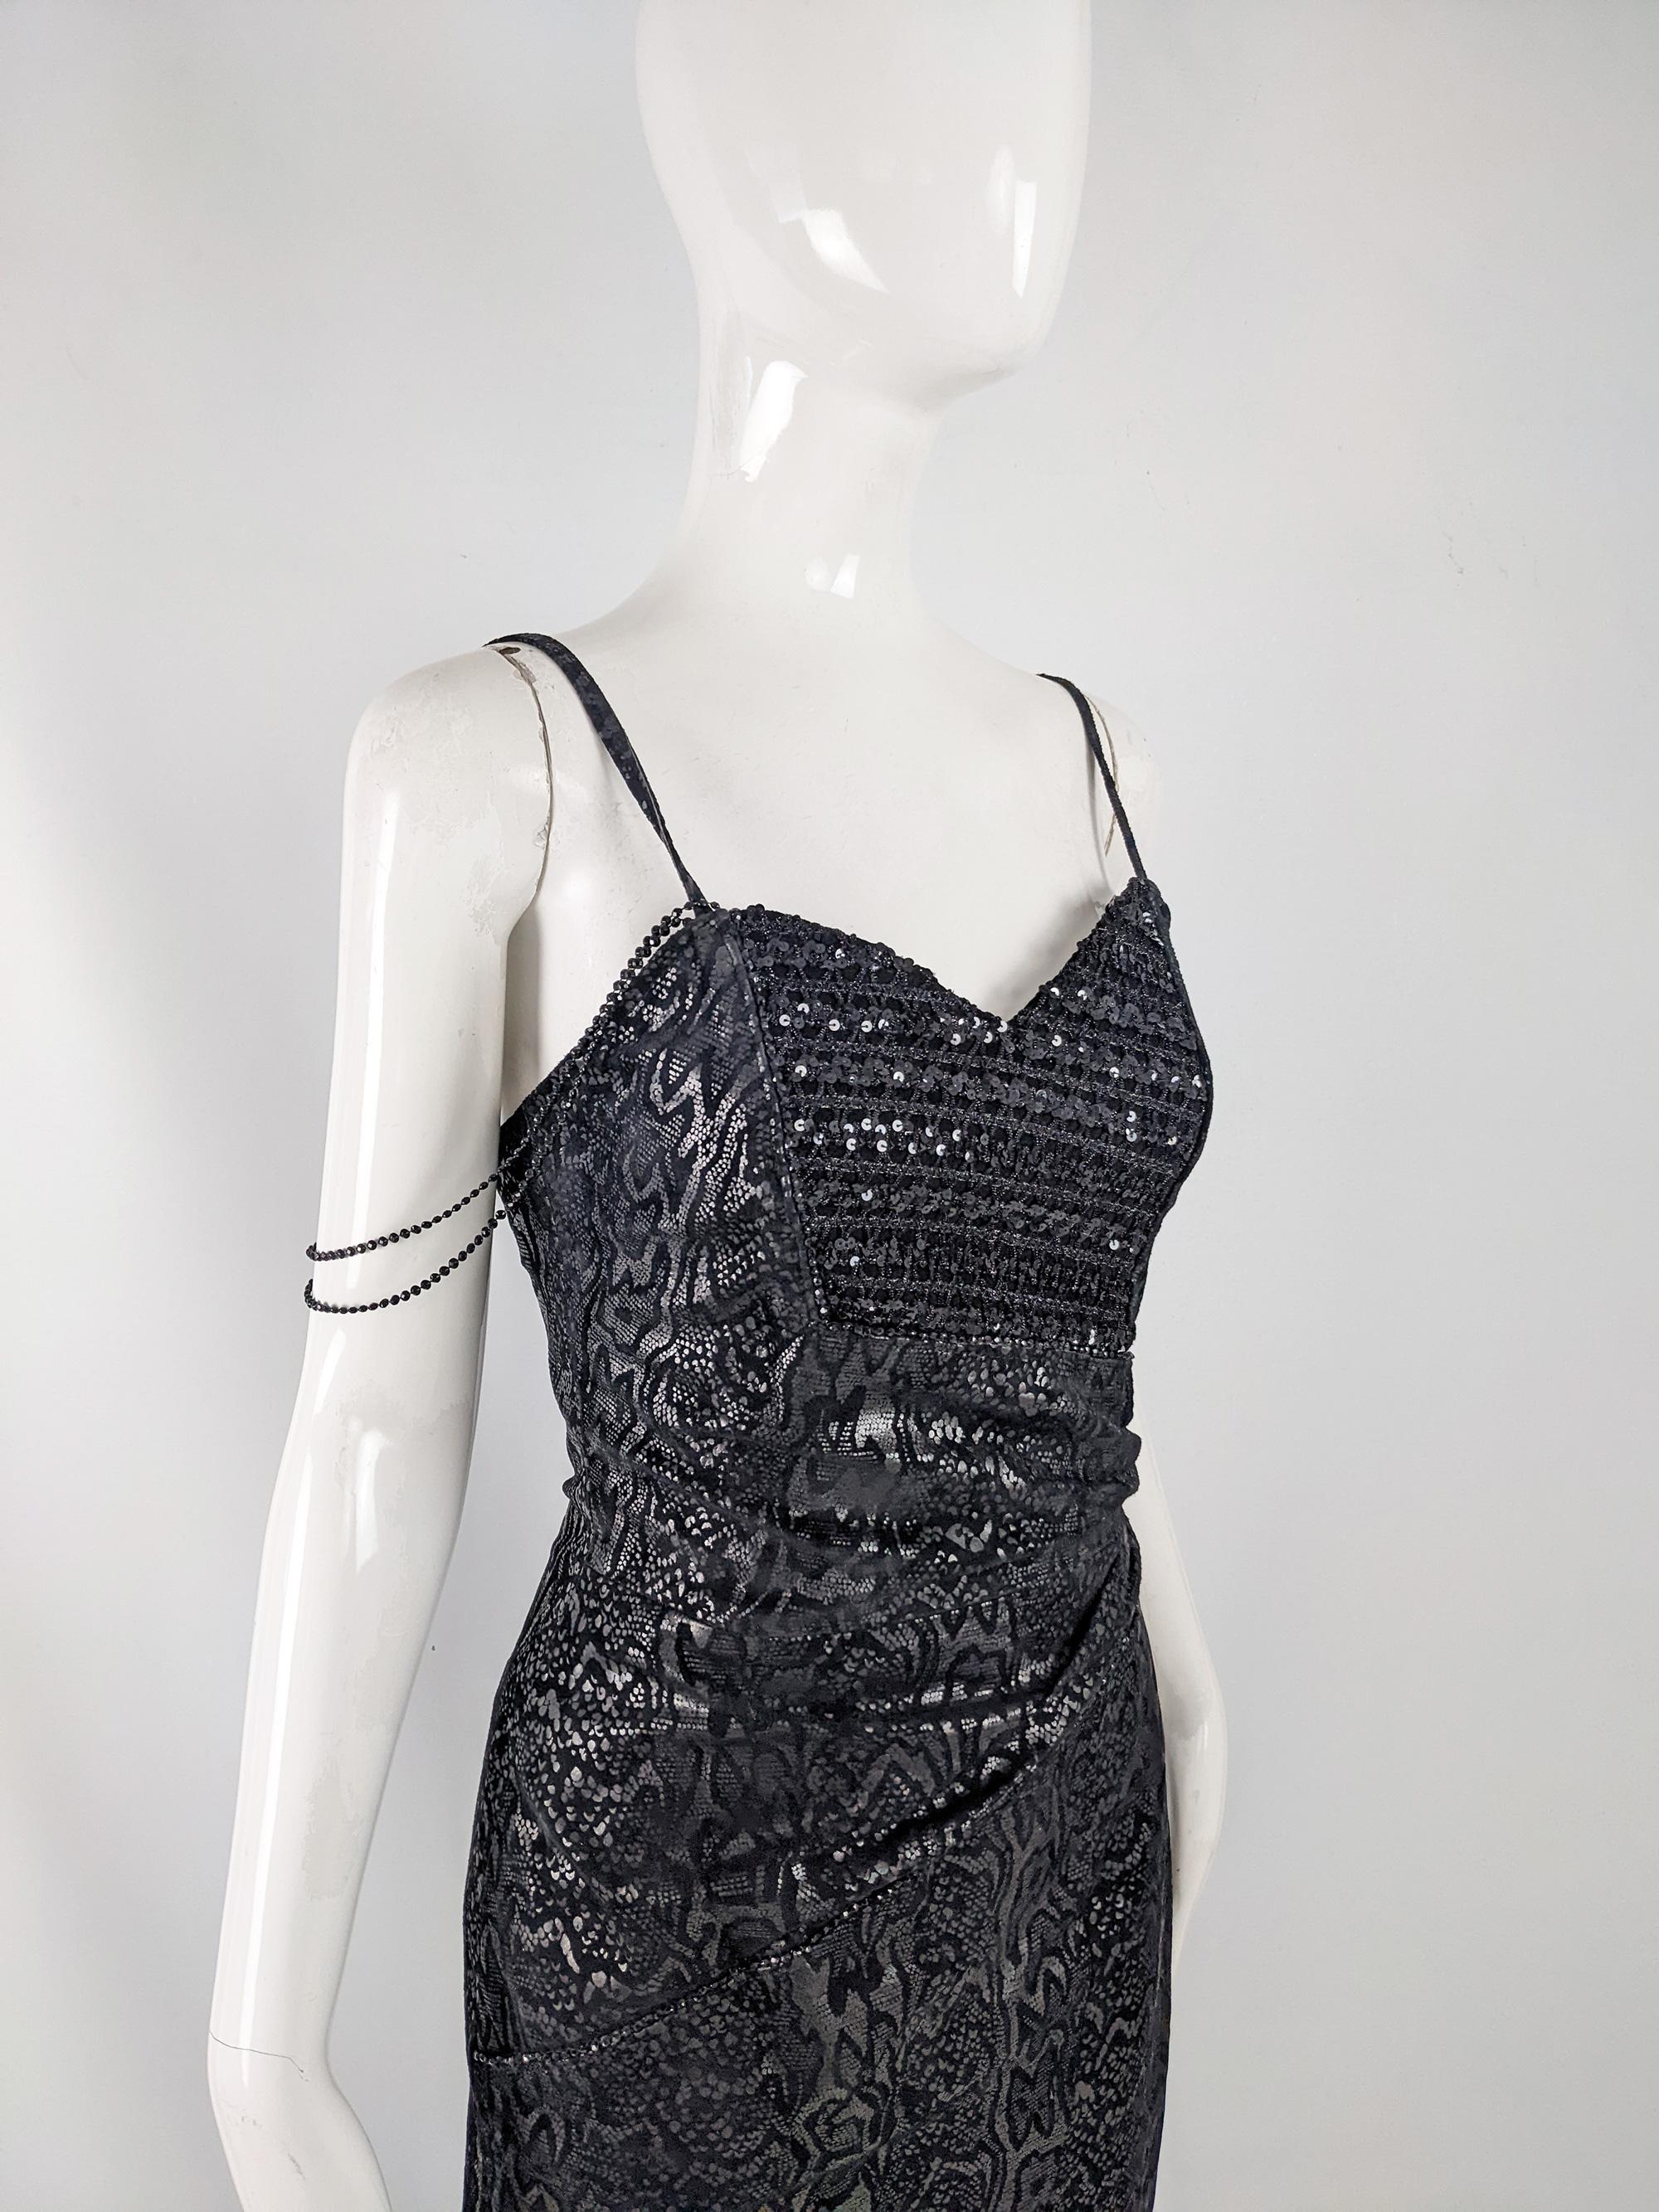 Jacques Sac Vintage Black Leather Snakeskin Print Sequin Real Leather Dress 3